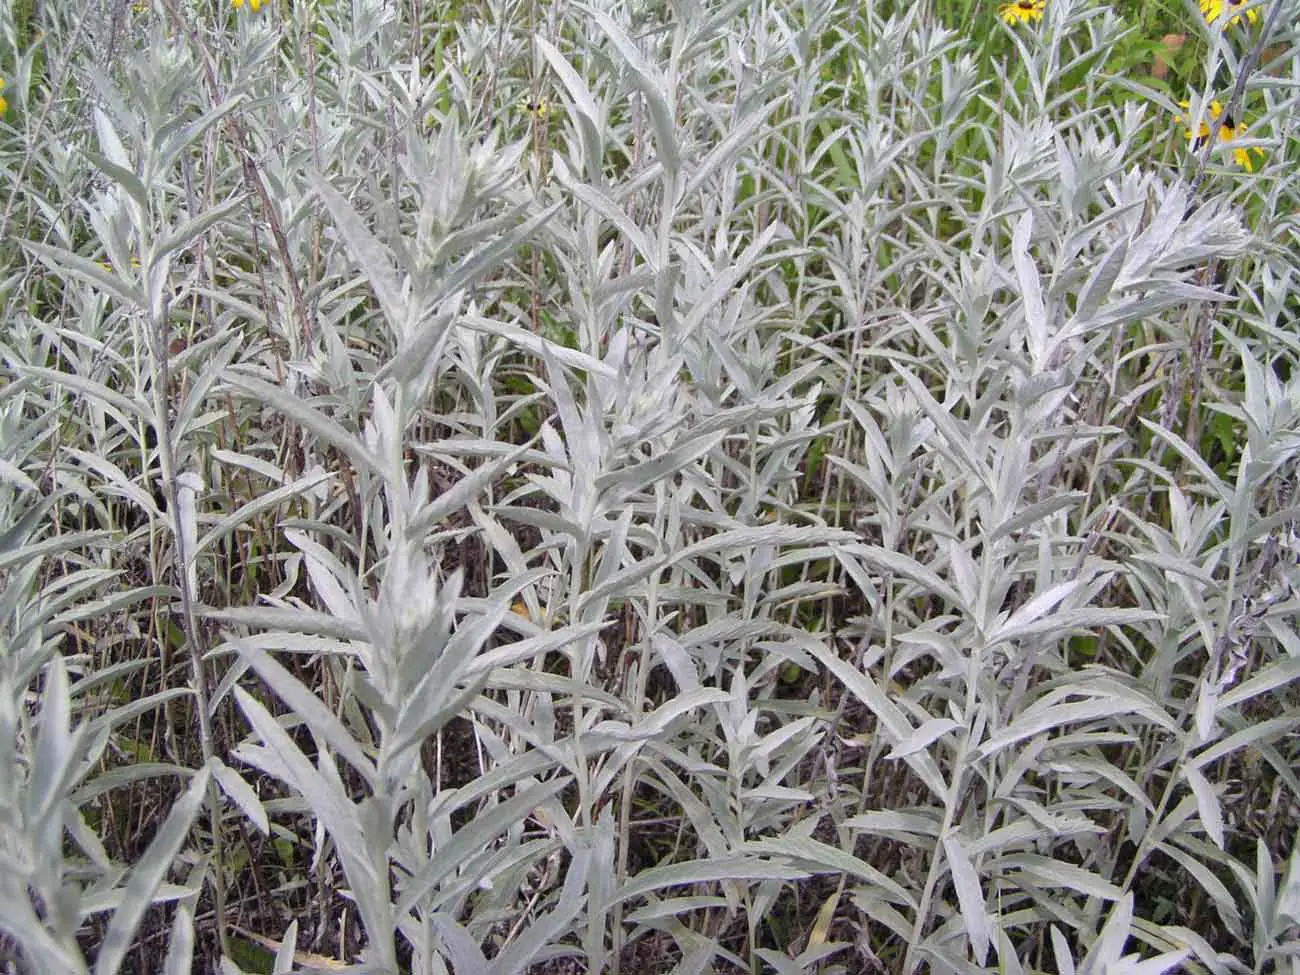 artemisia ludovician herb Estafiate Mugwort White Sagebush